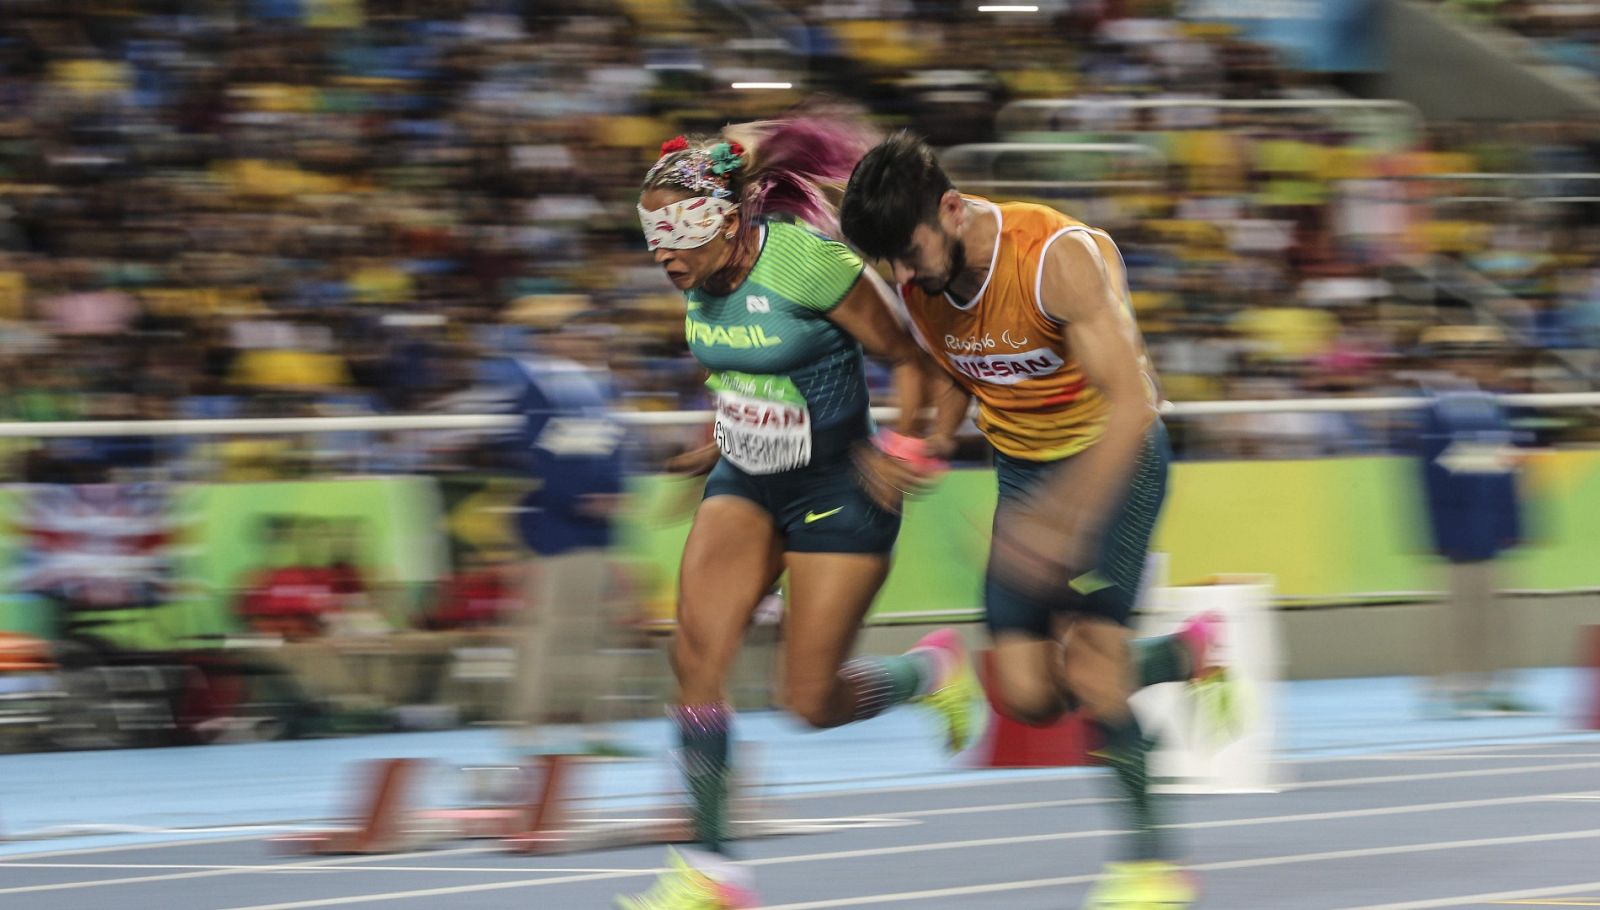 La atleta brasileña Terezinha Guilhermida corriendo junto a su deportista de apoyo en la prueba 200 m T11